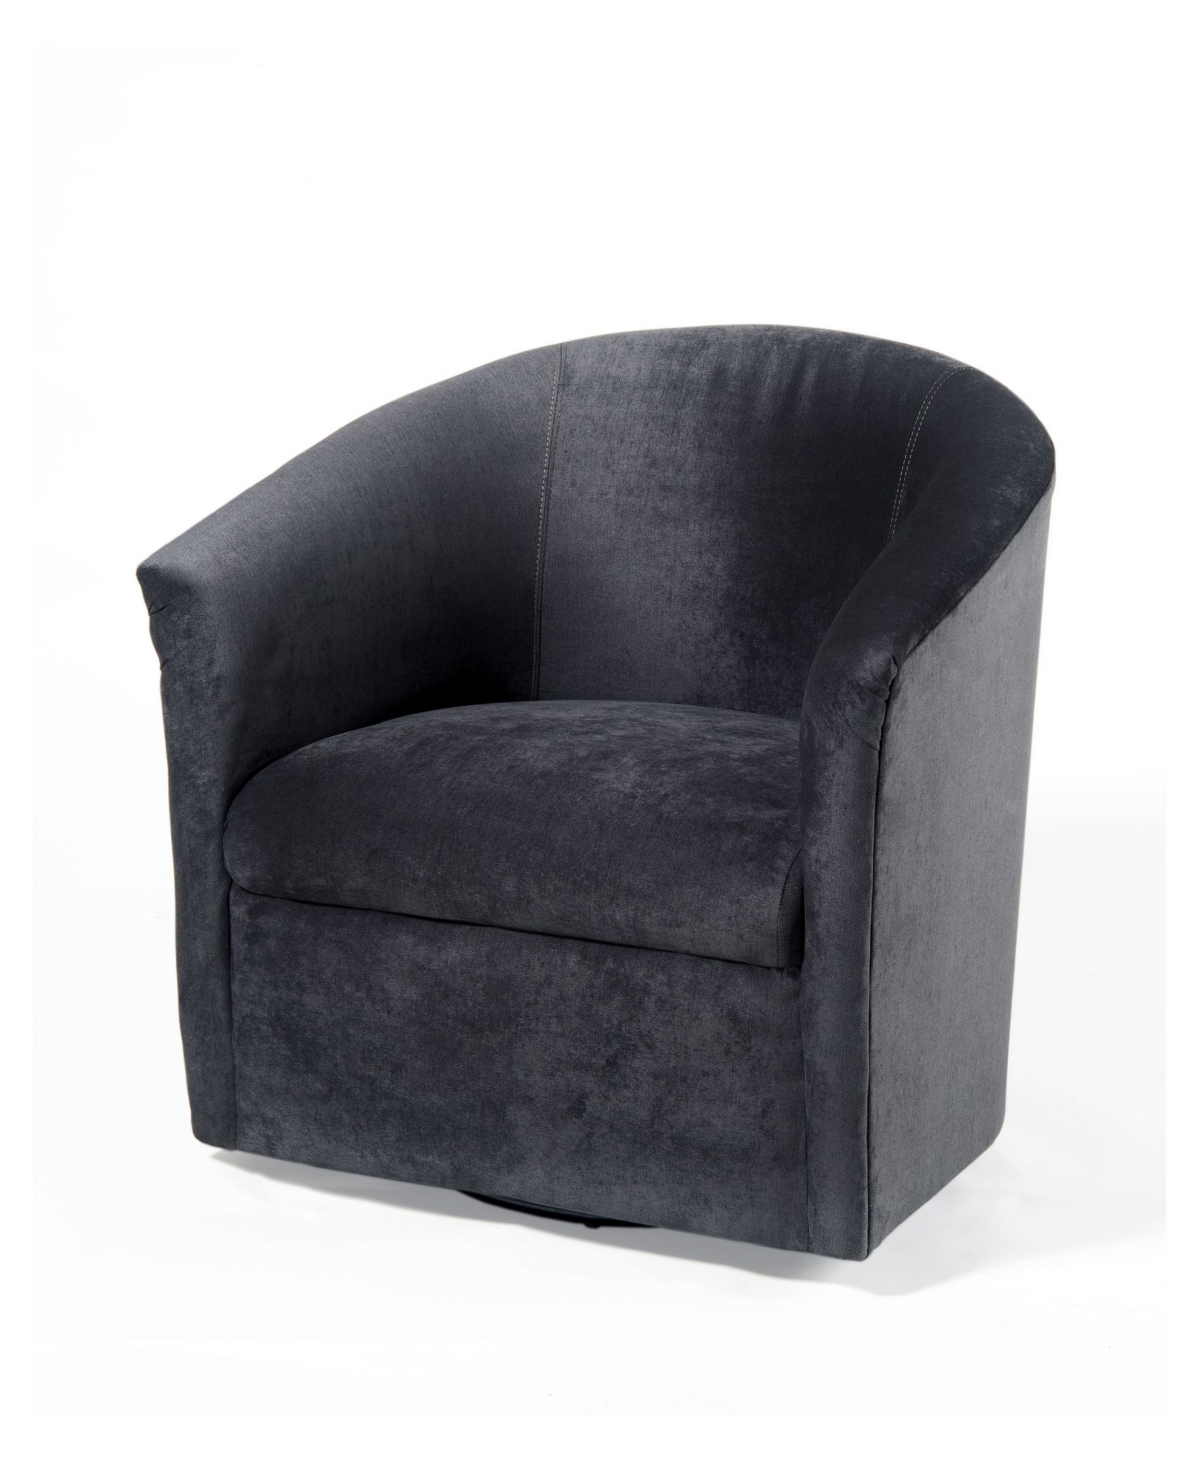 Comfort Pointe Elizabeth Swivel Chair In Dark Gray